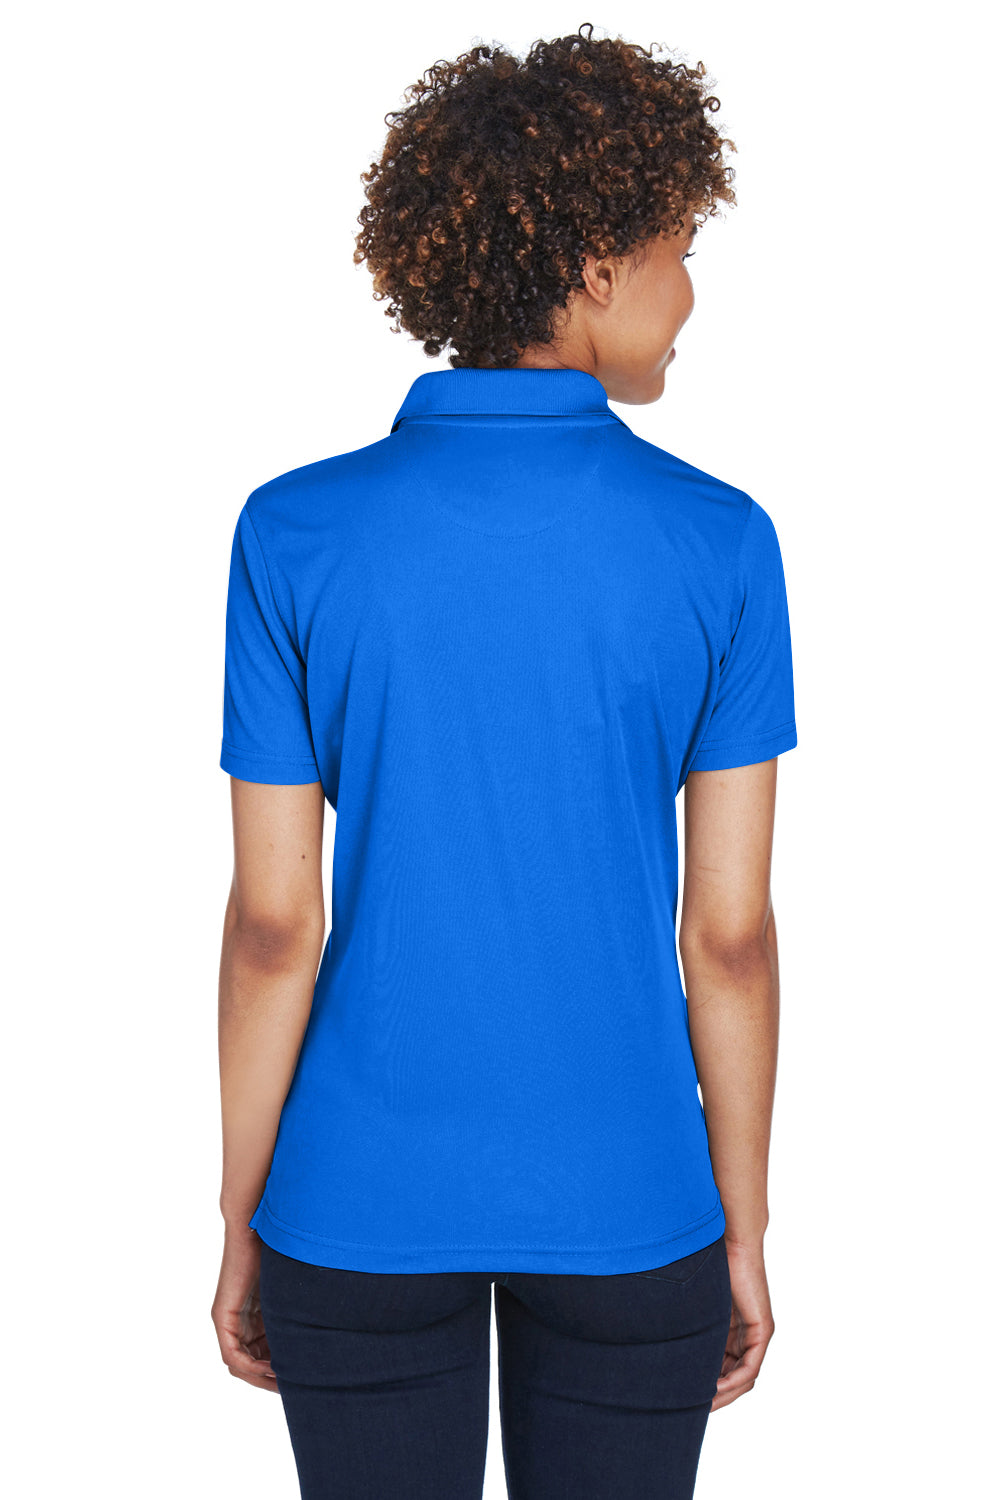 UltraClub 8210L Womens Cool & Dry Moisture Wicking Short Sleeve Polo Shirt Royal Blue Back